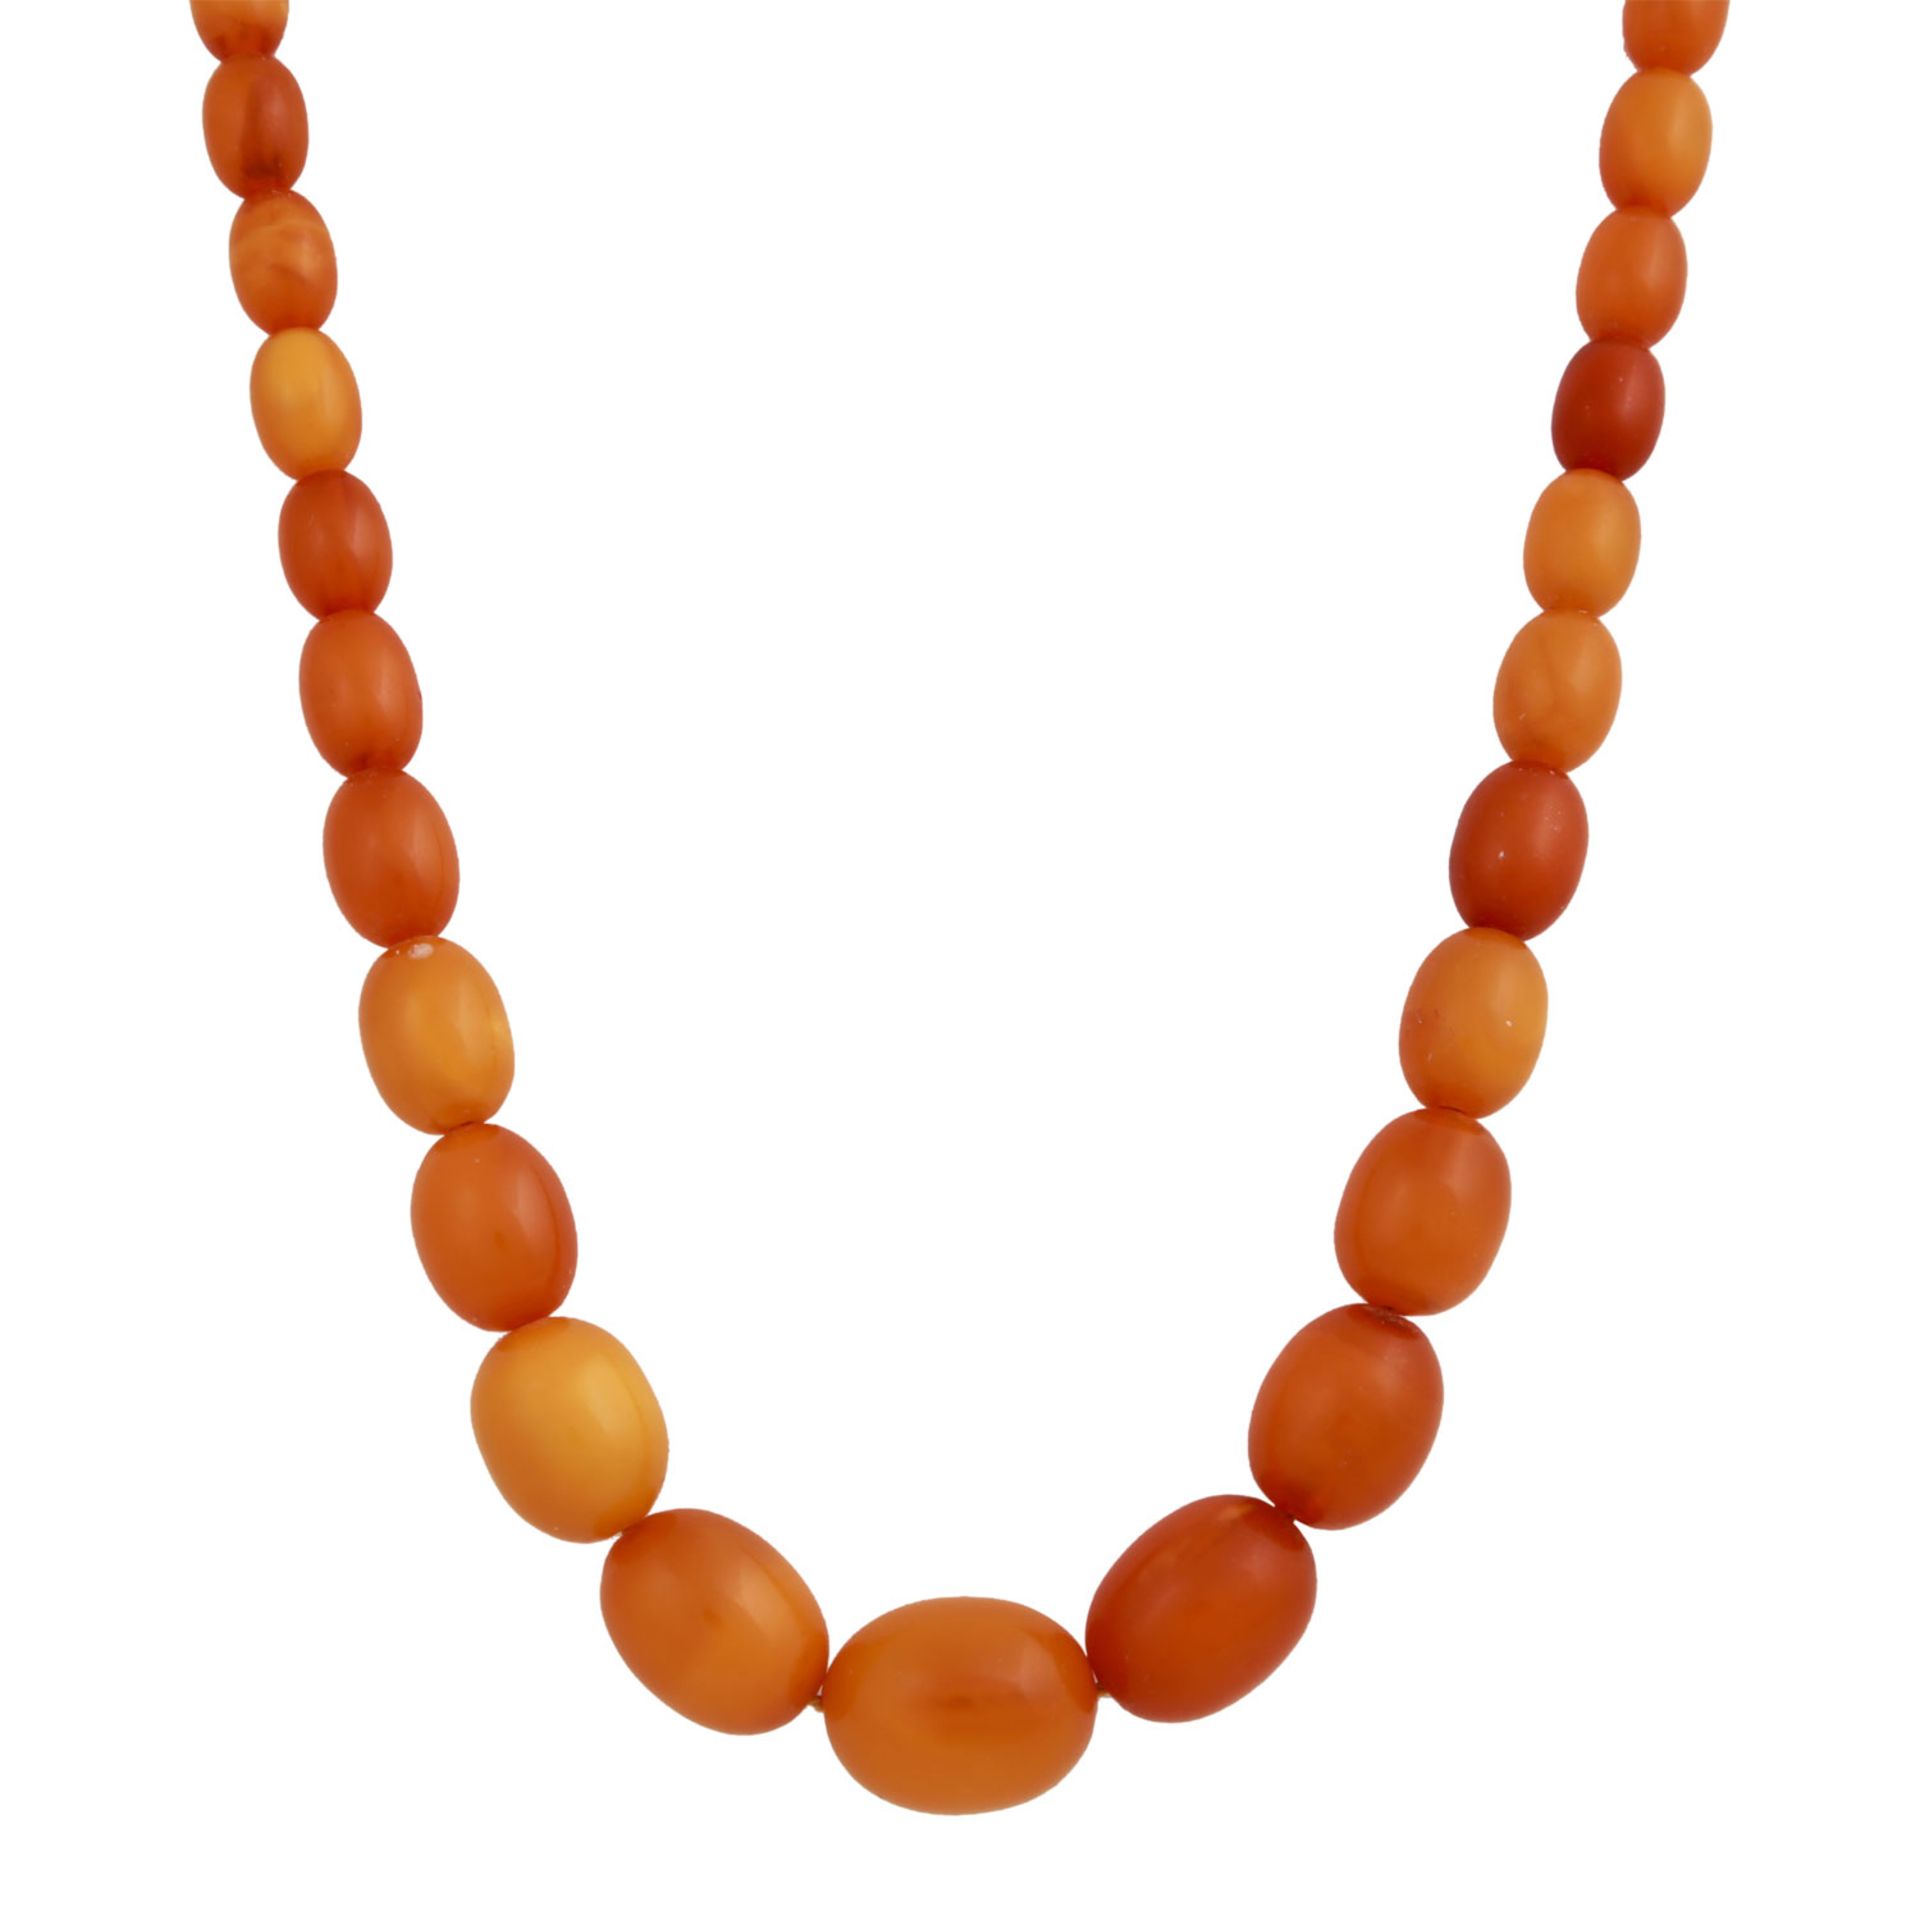 Bernsteinkette, olivenförmig im Verlauf,7-17 mm, L. ca. 50 cm, karamelfarben meliert, Karabiner GG 9 - Image 2 of 4